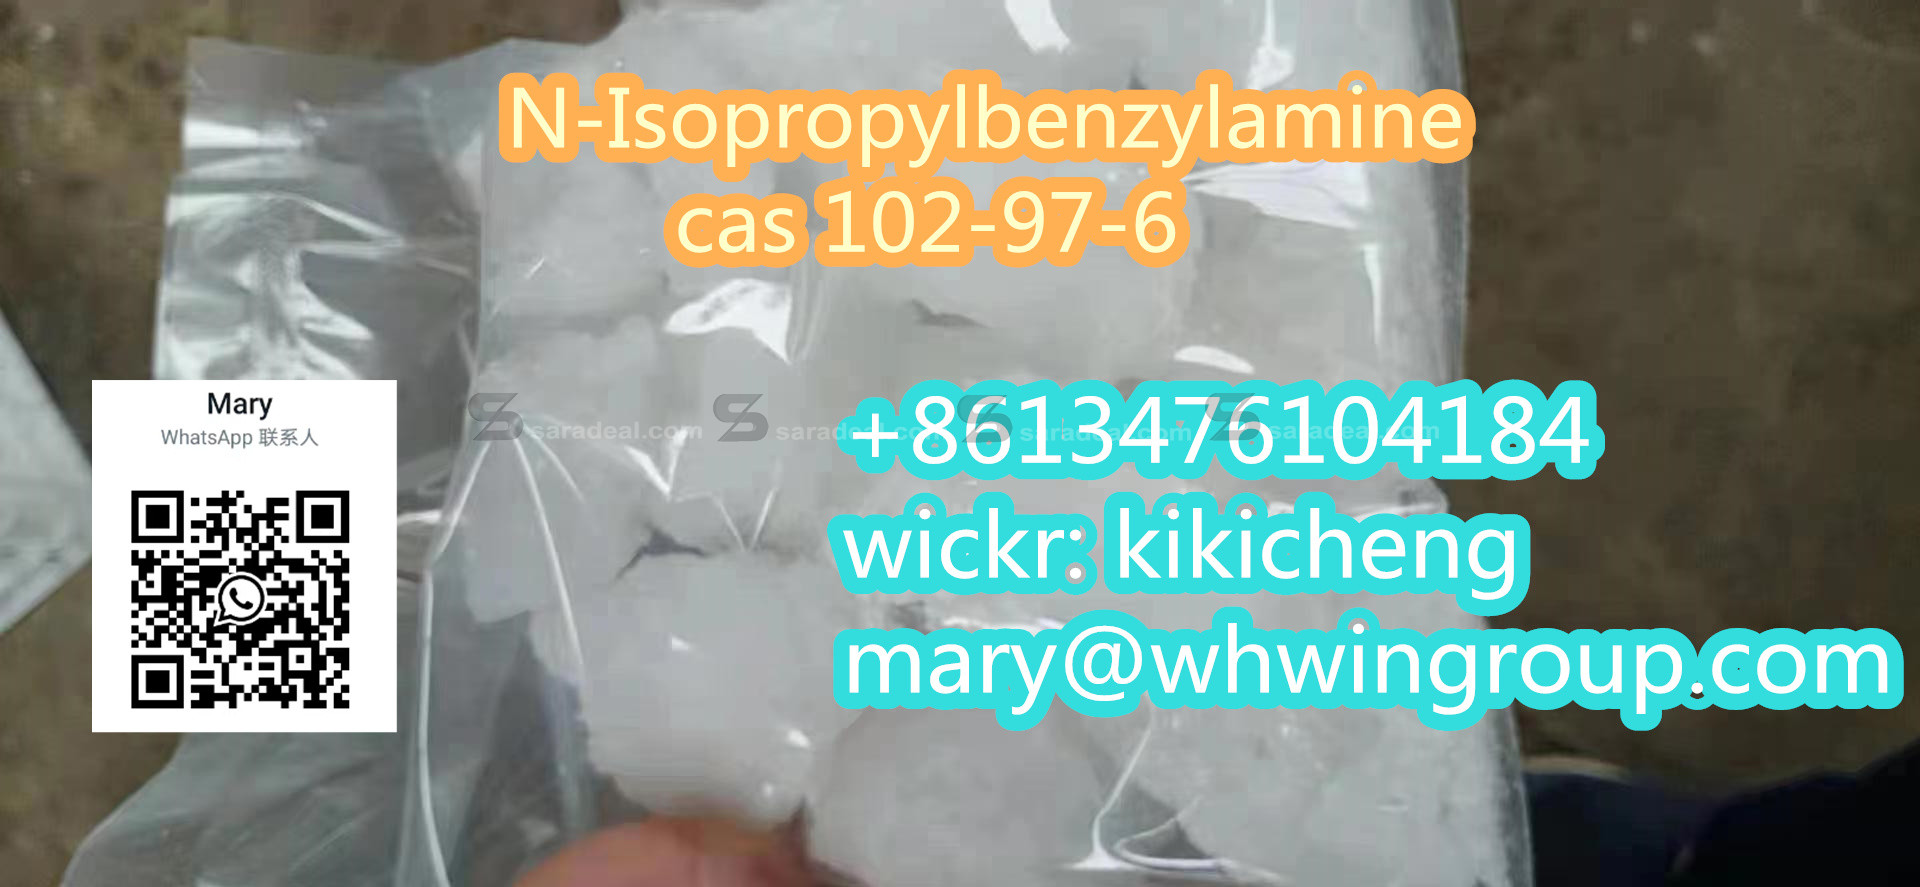 N-Isopropylbenzylamine 102-97-6 +86-13476104184